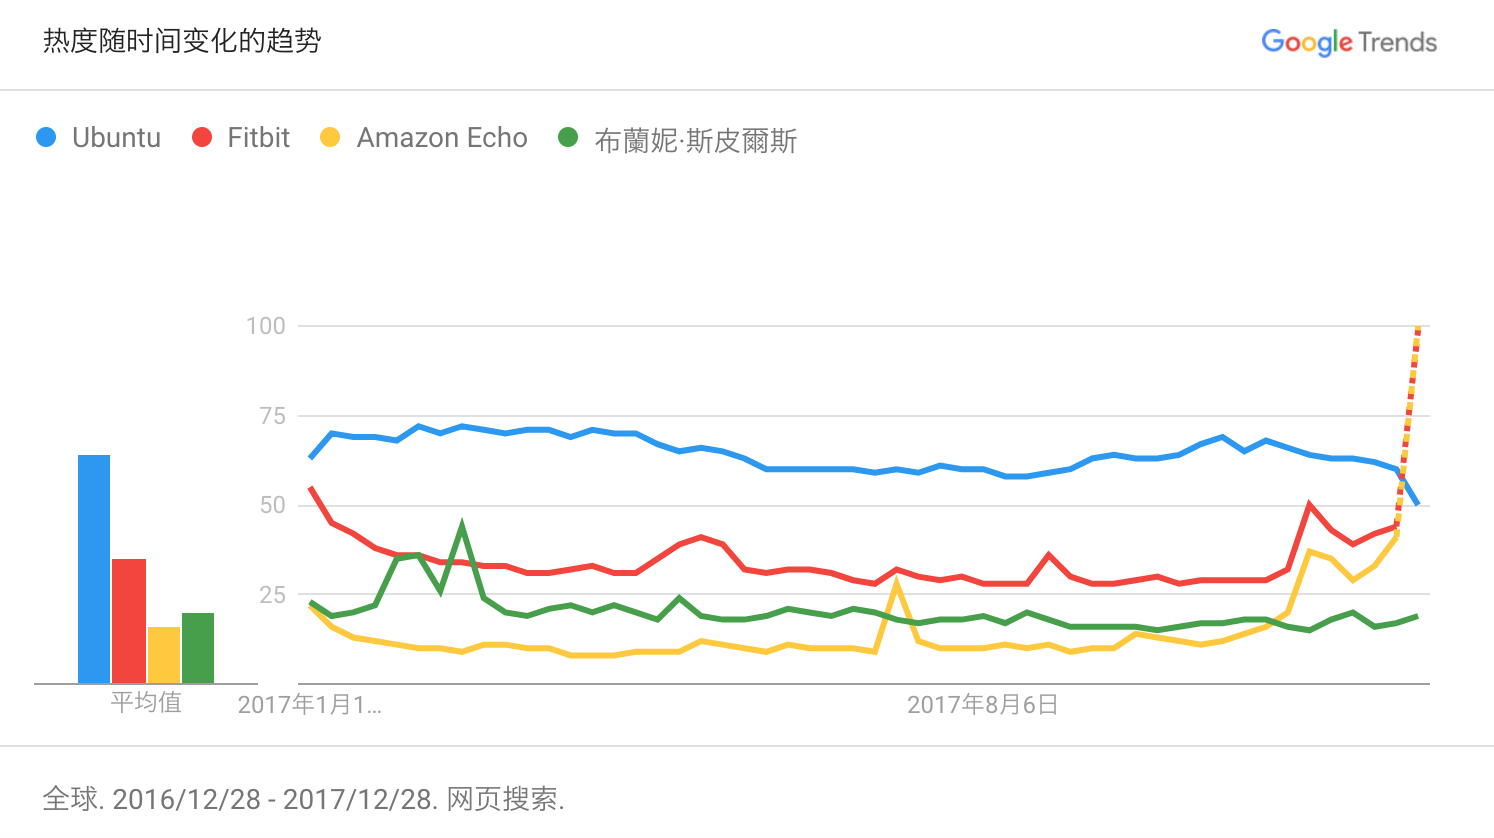 Google Trends：2017 年 Ubuntu 比布兰妮更“火”